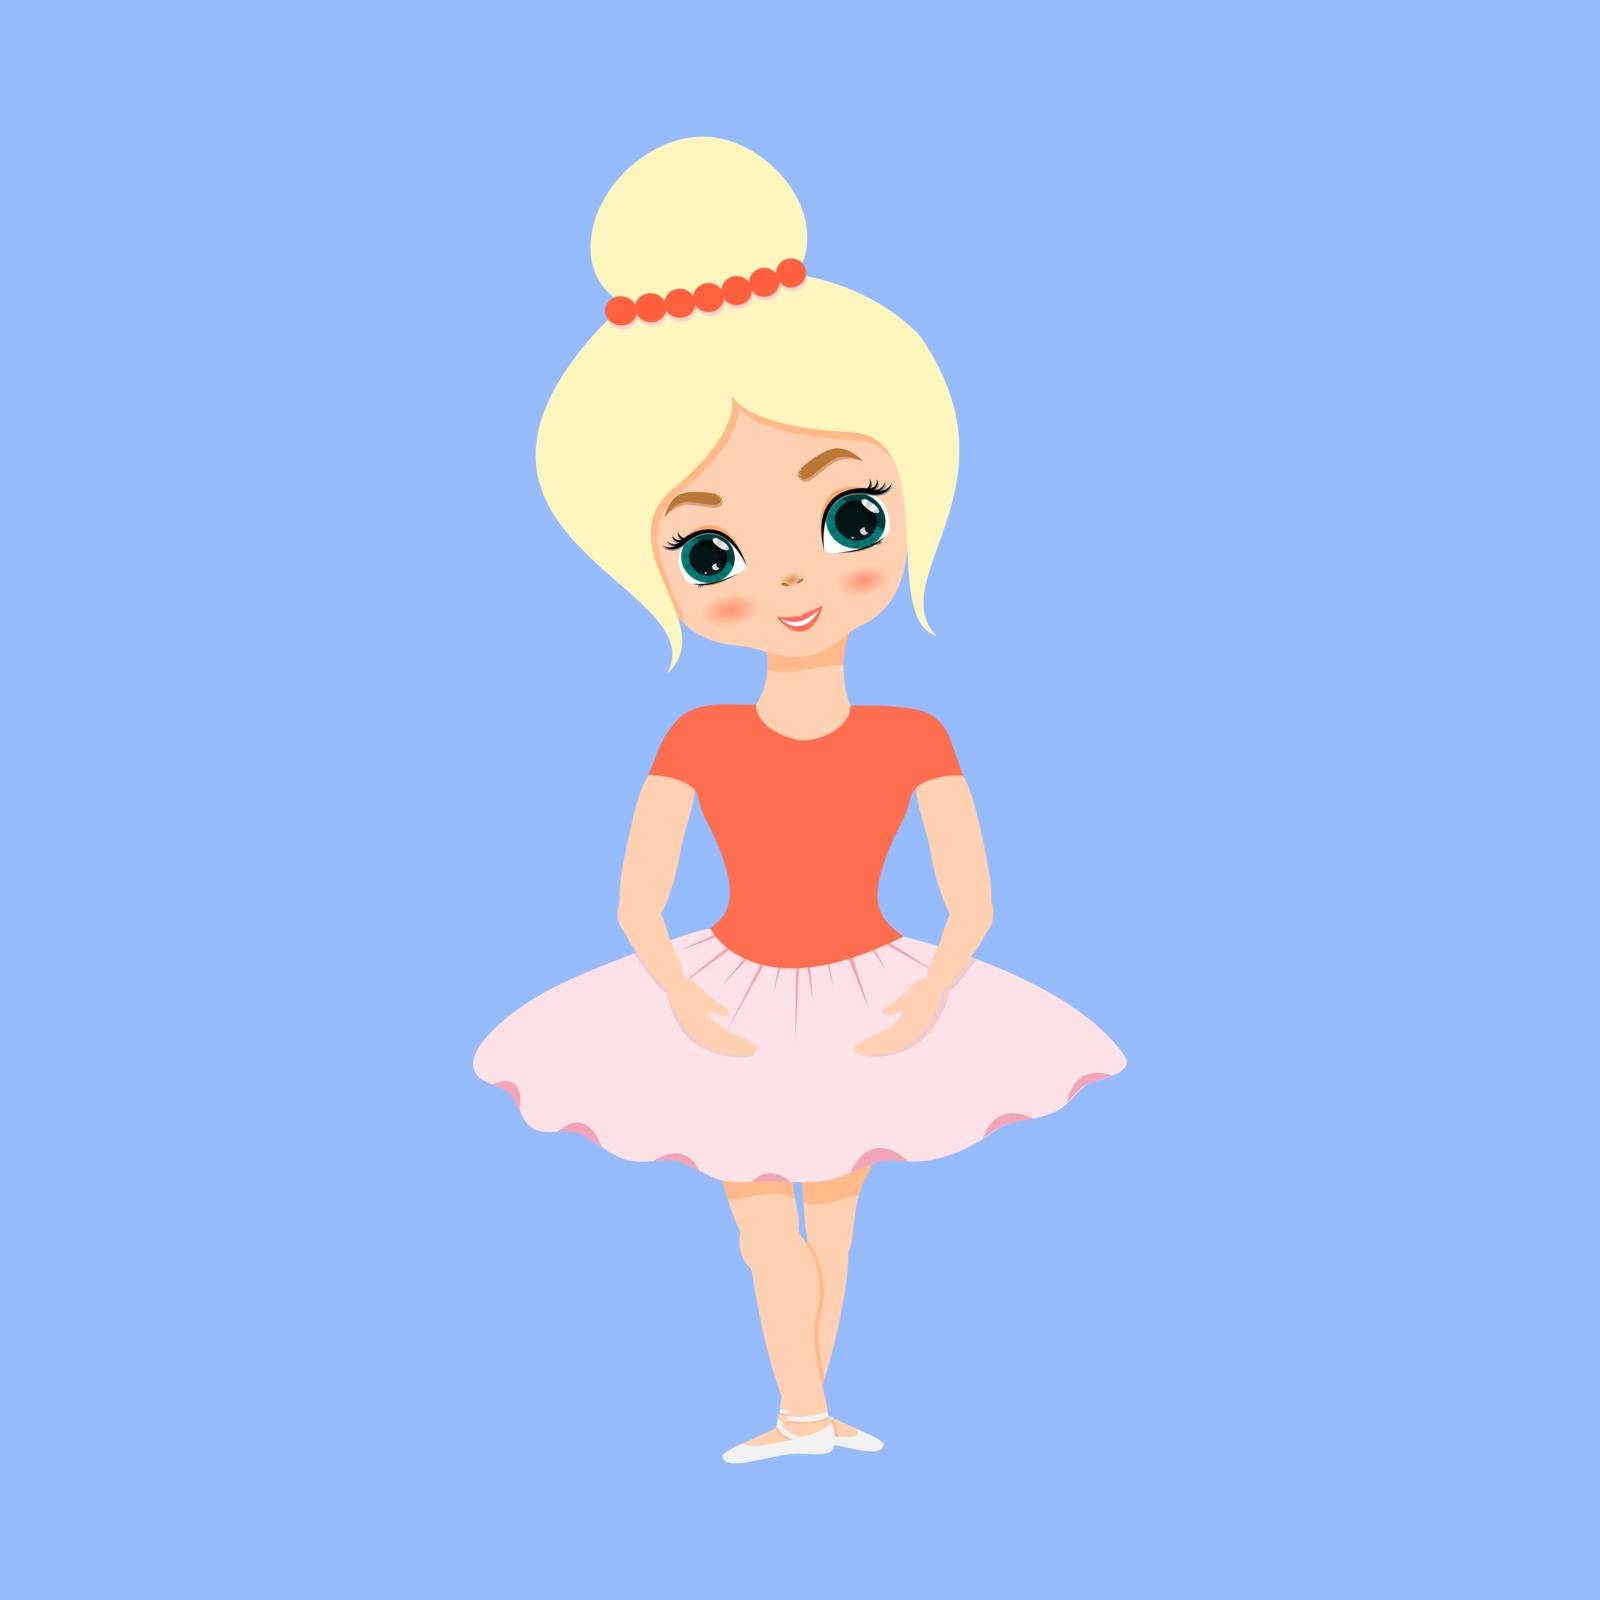 Cute small ballerina dancing. Ballerina girl in pink tutu dress. Beautiful kid flat cartoon vector illustration isolated on blue background.